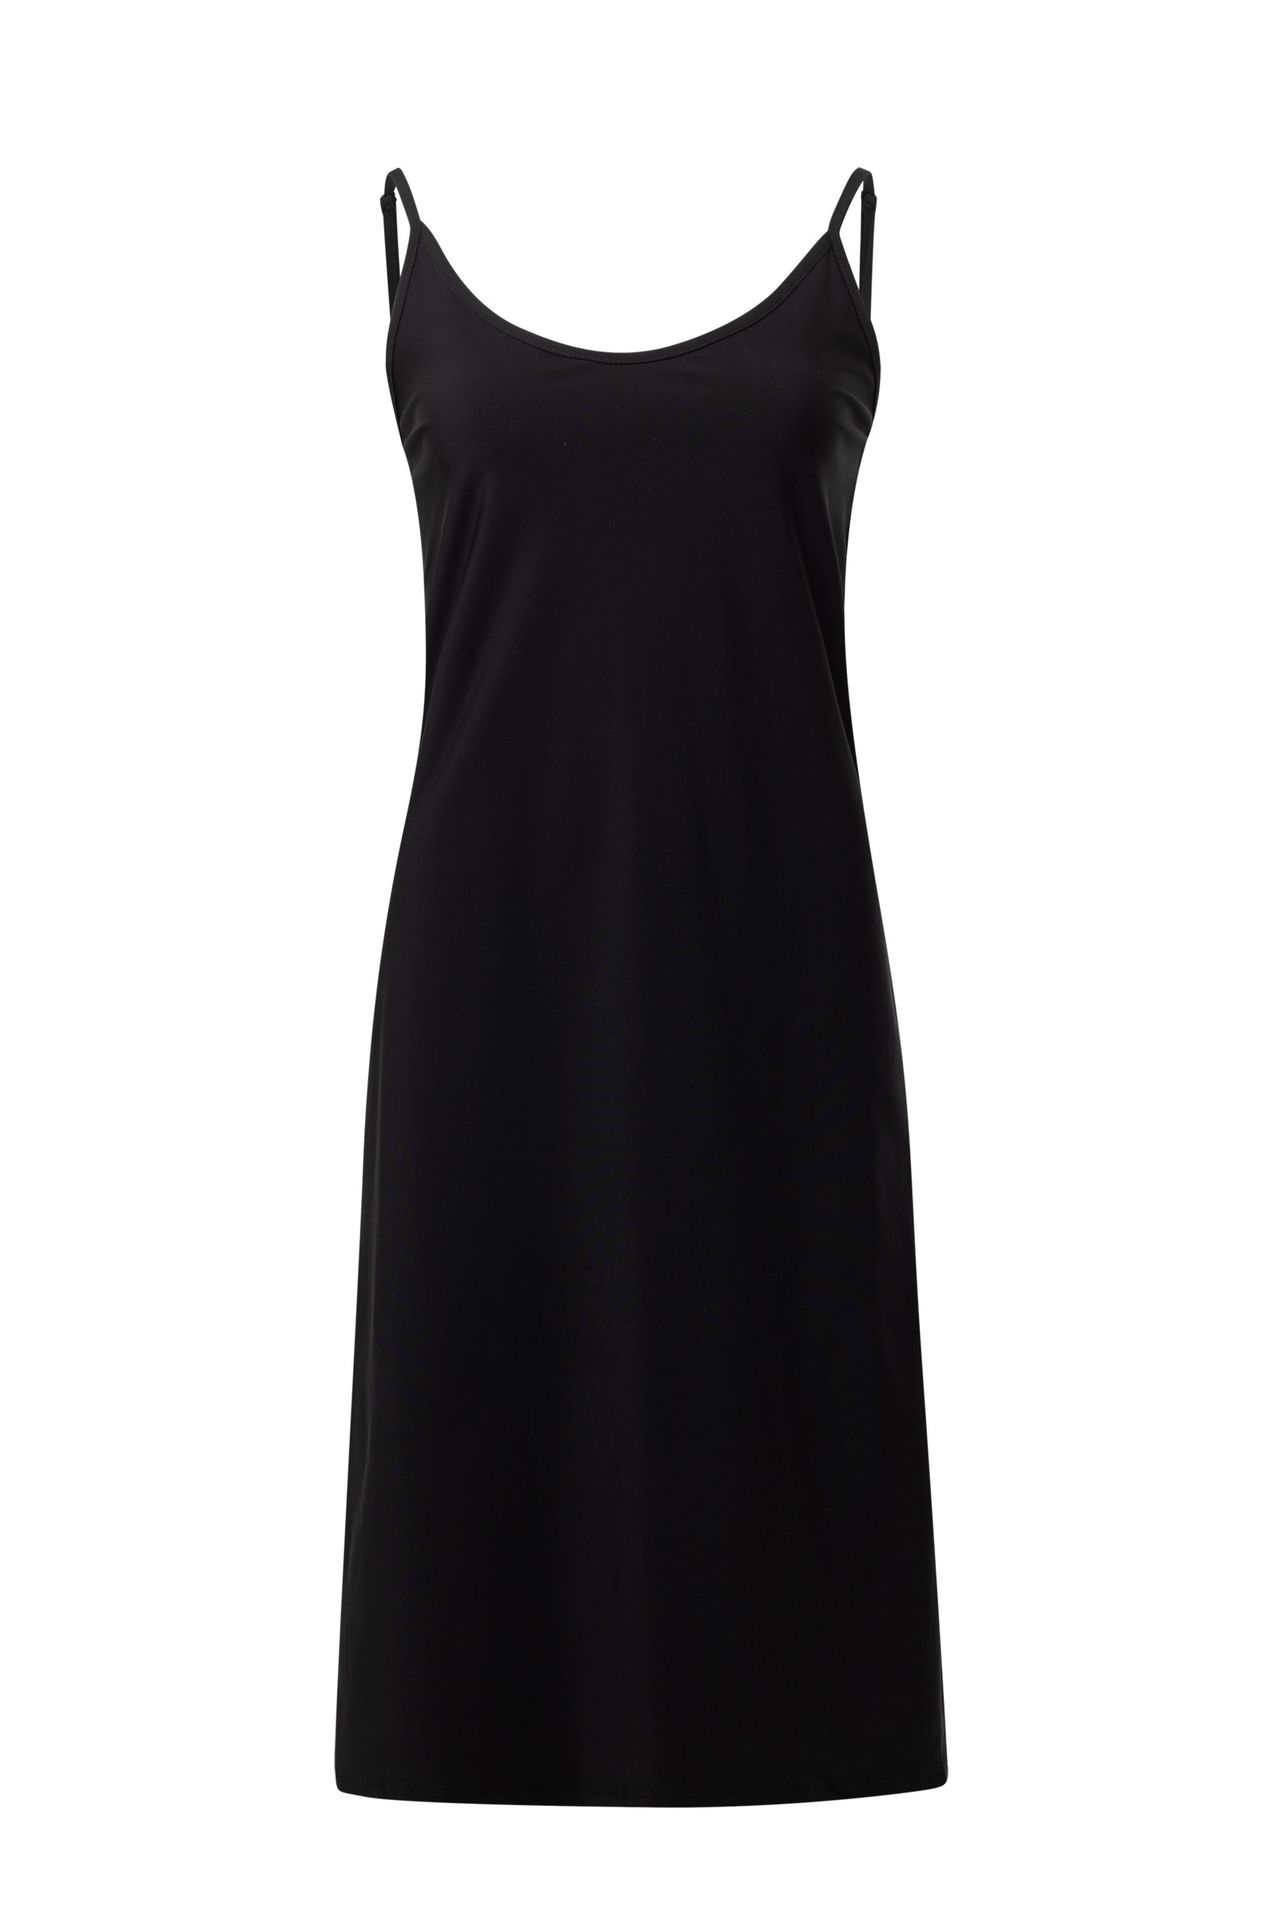 Norah Midi jurk zwart travelstof black 213471-001